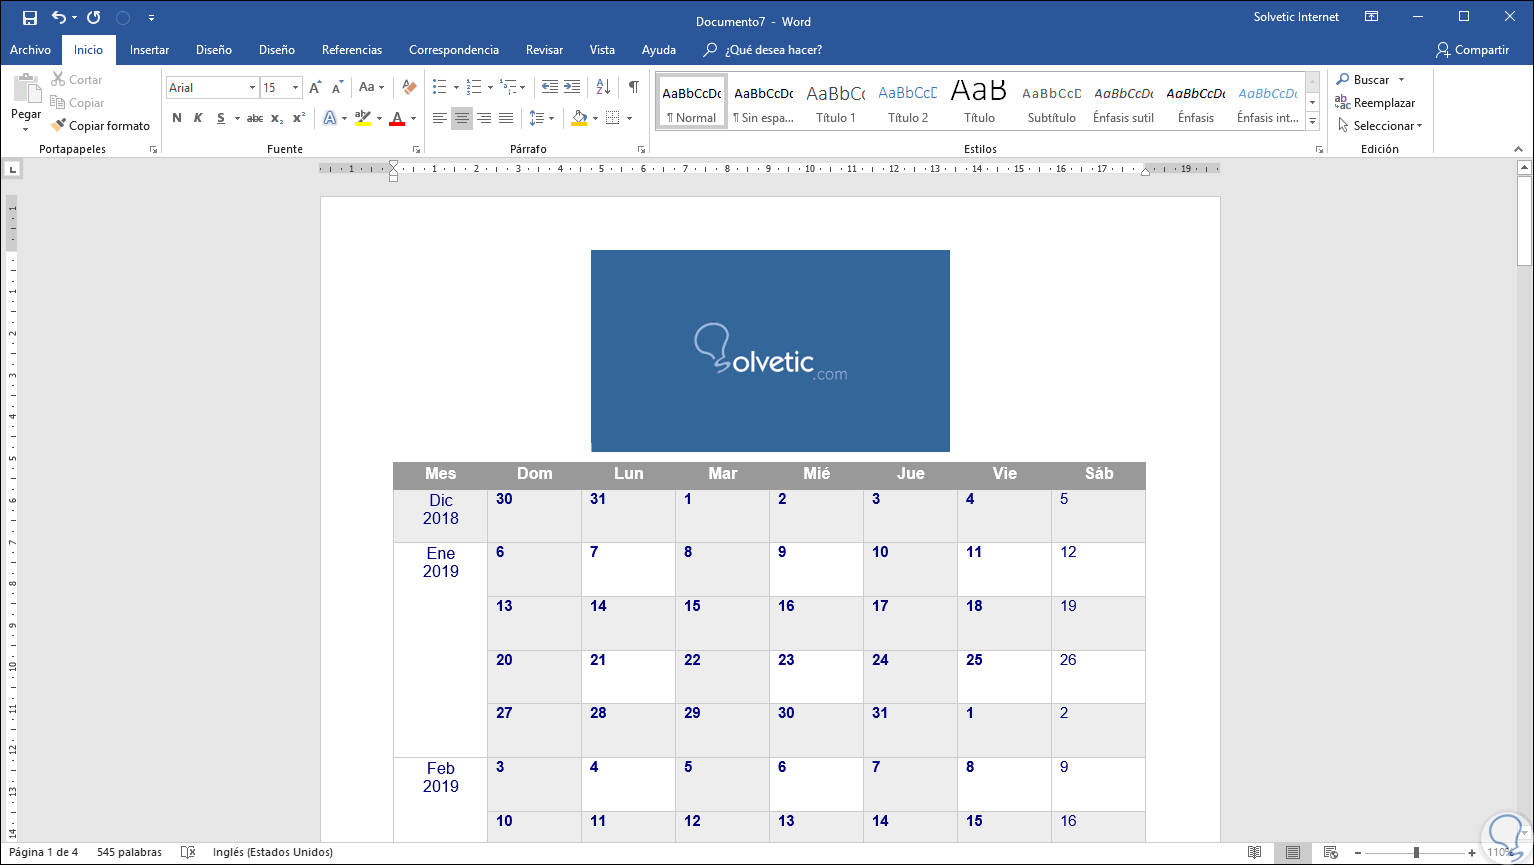 Como hacer un calendario con word